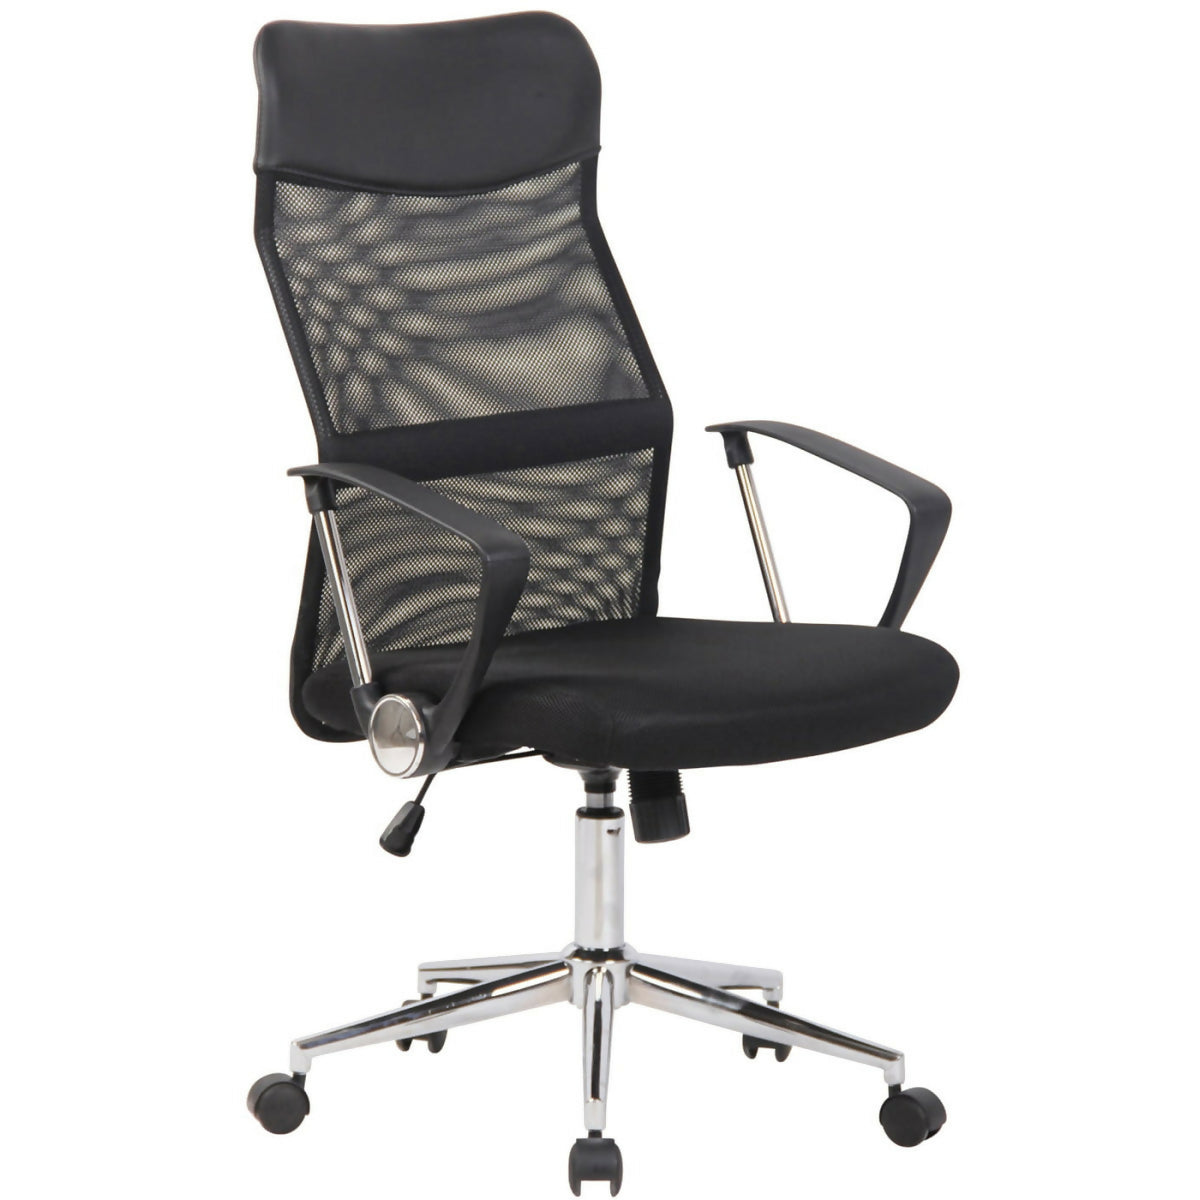 Korba office chair - Black fabric 